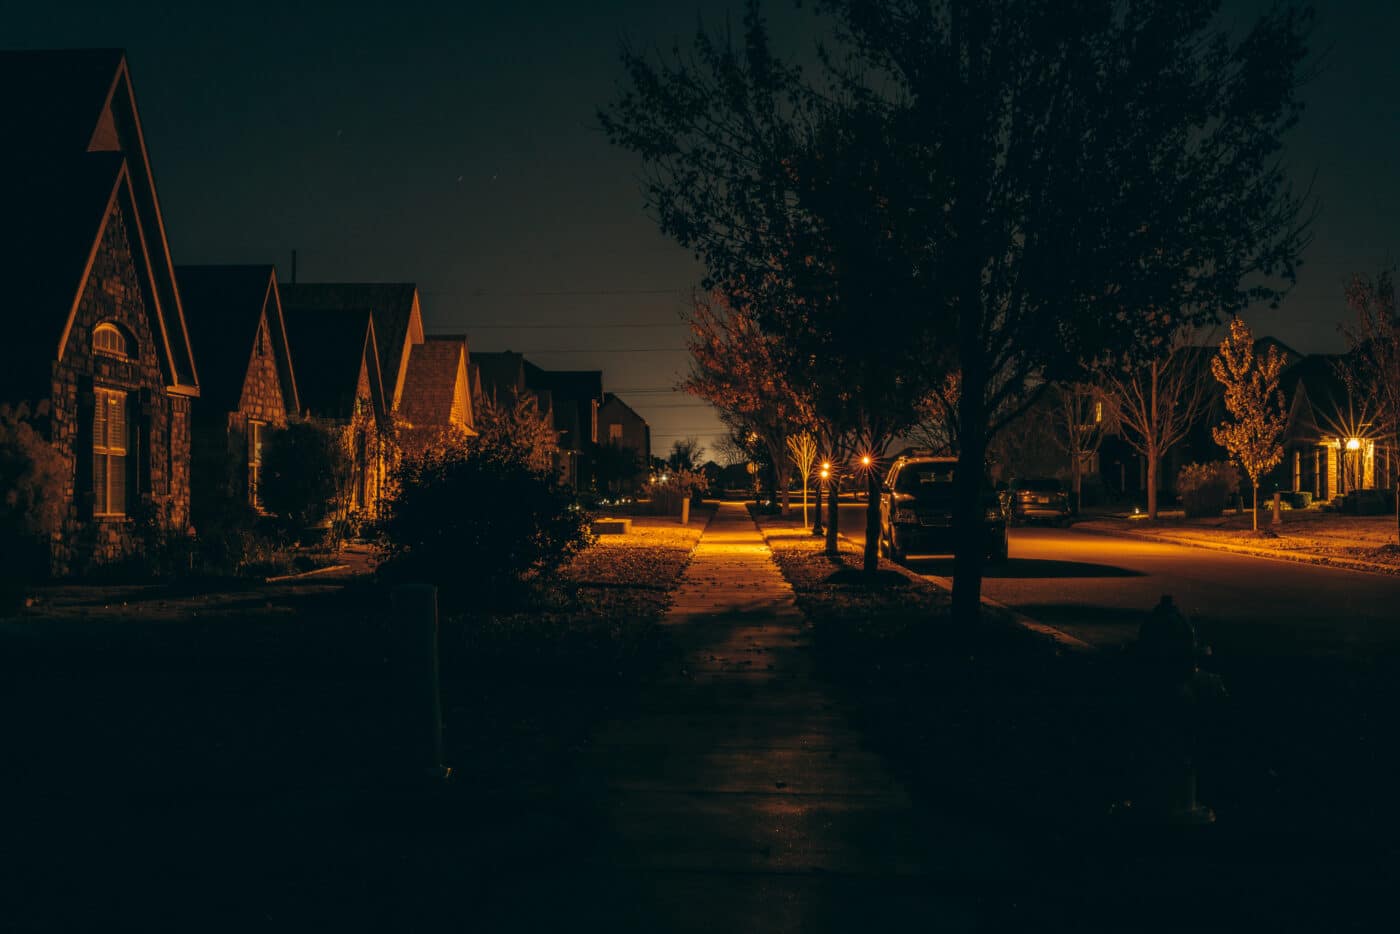 Dark neighborhood street